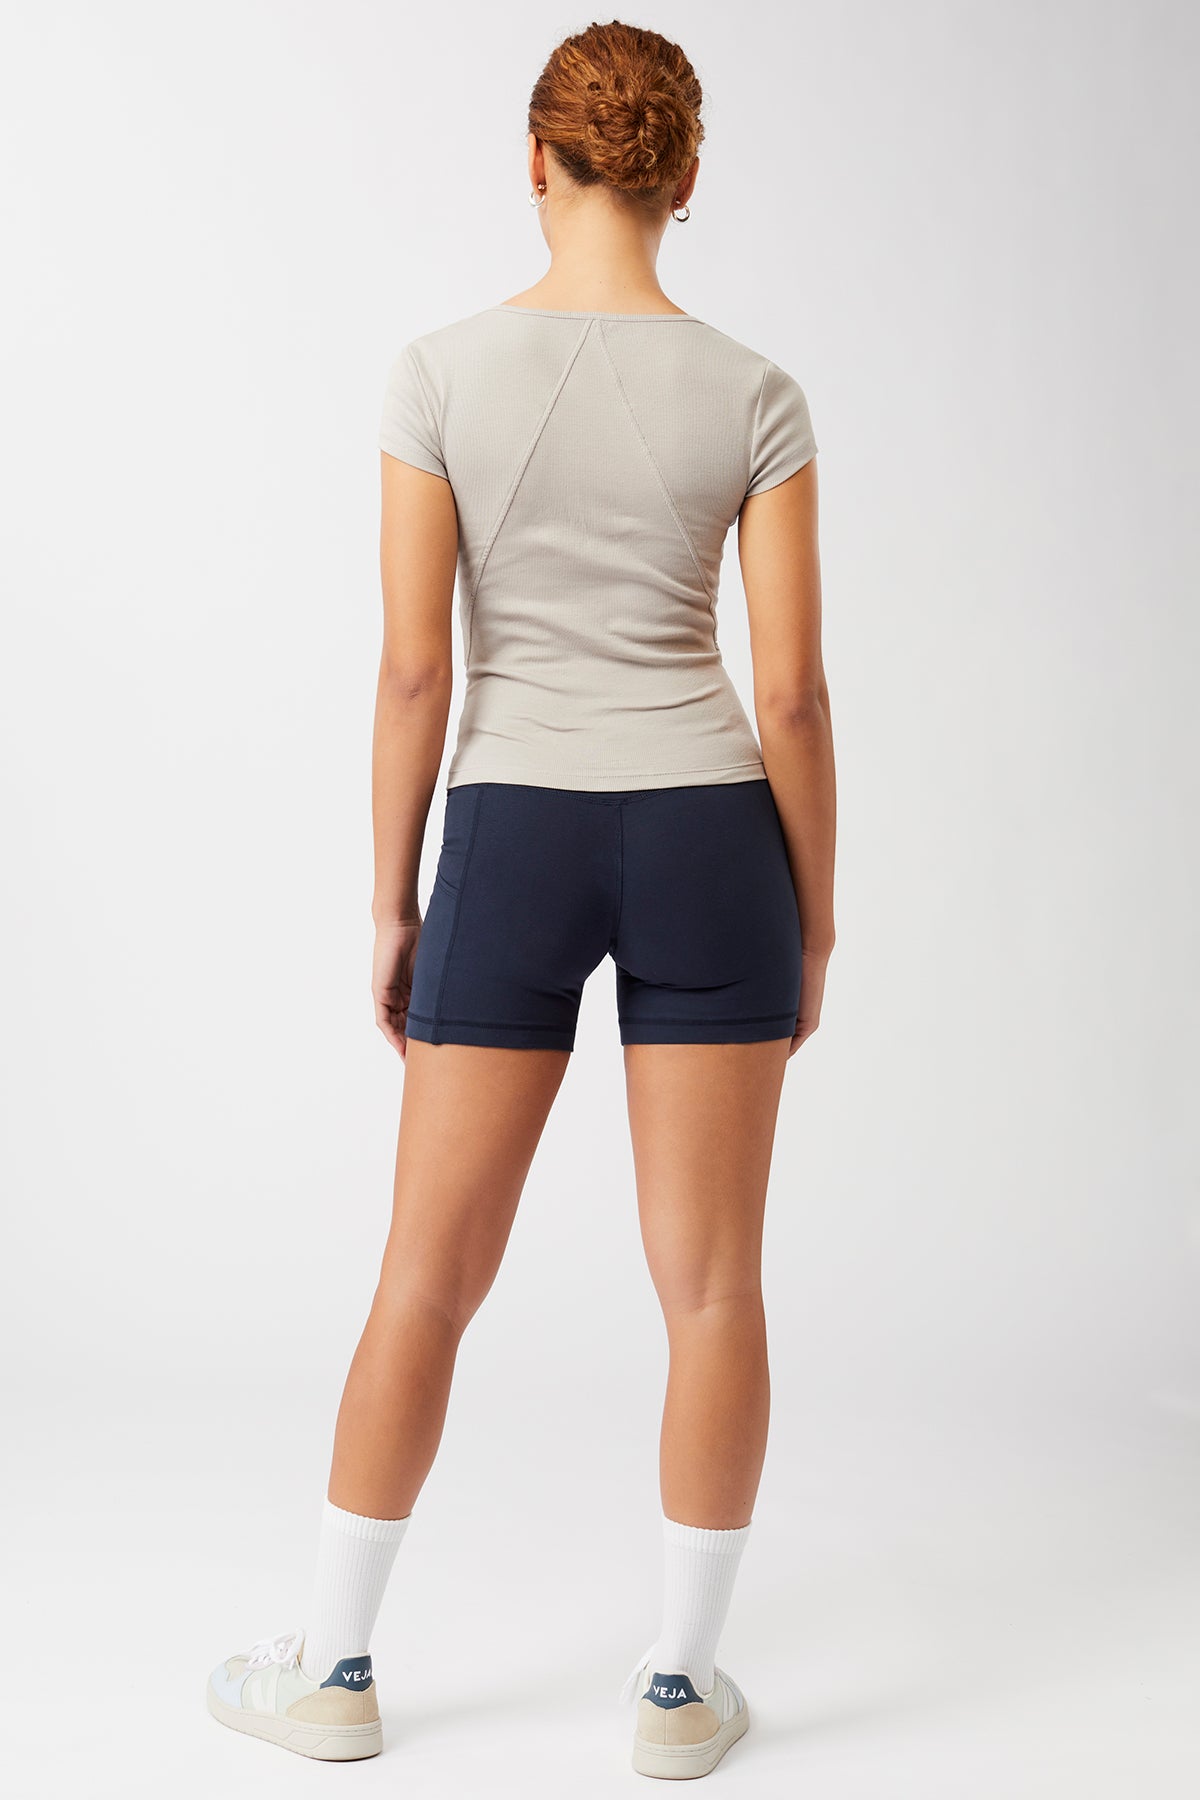 Mandala Yoga Shirt Grün Outfit Rückseite - Cap Sleeve Top